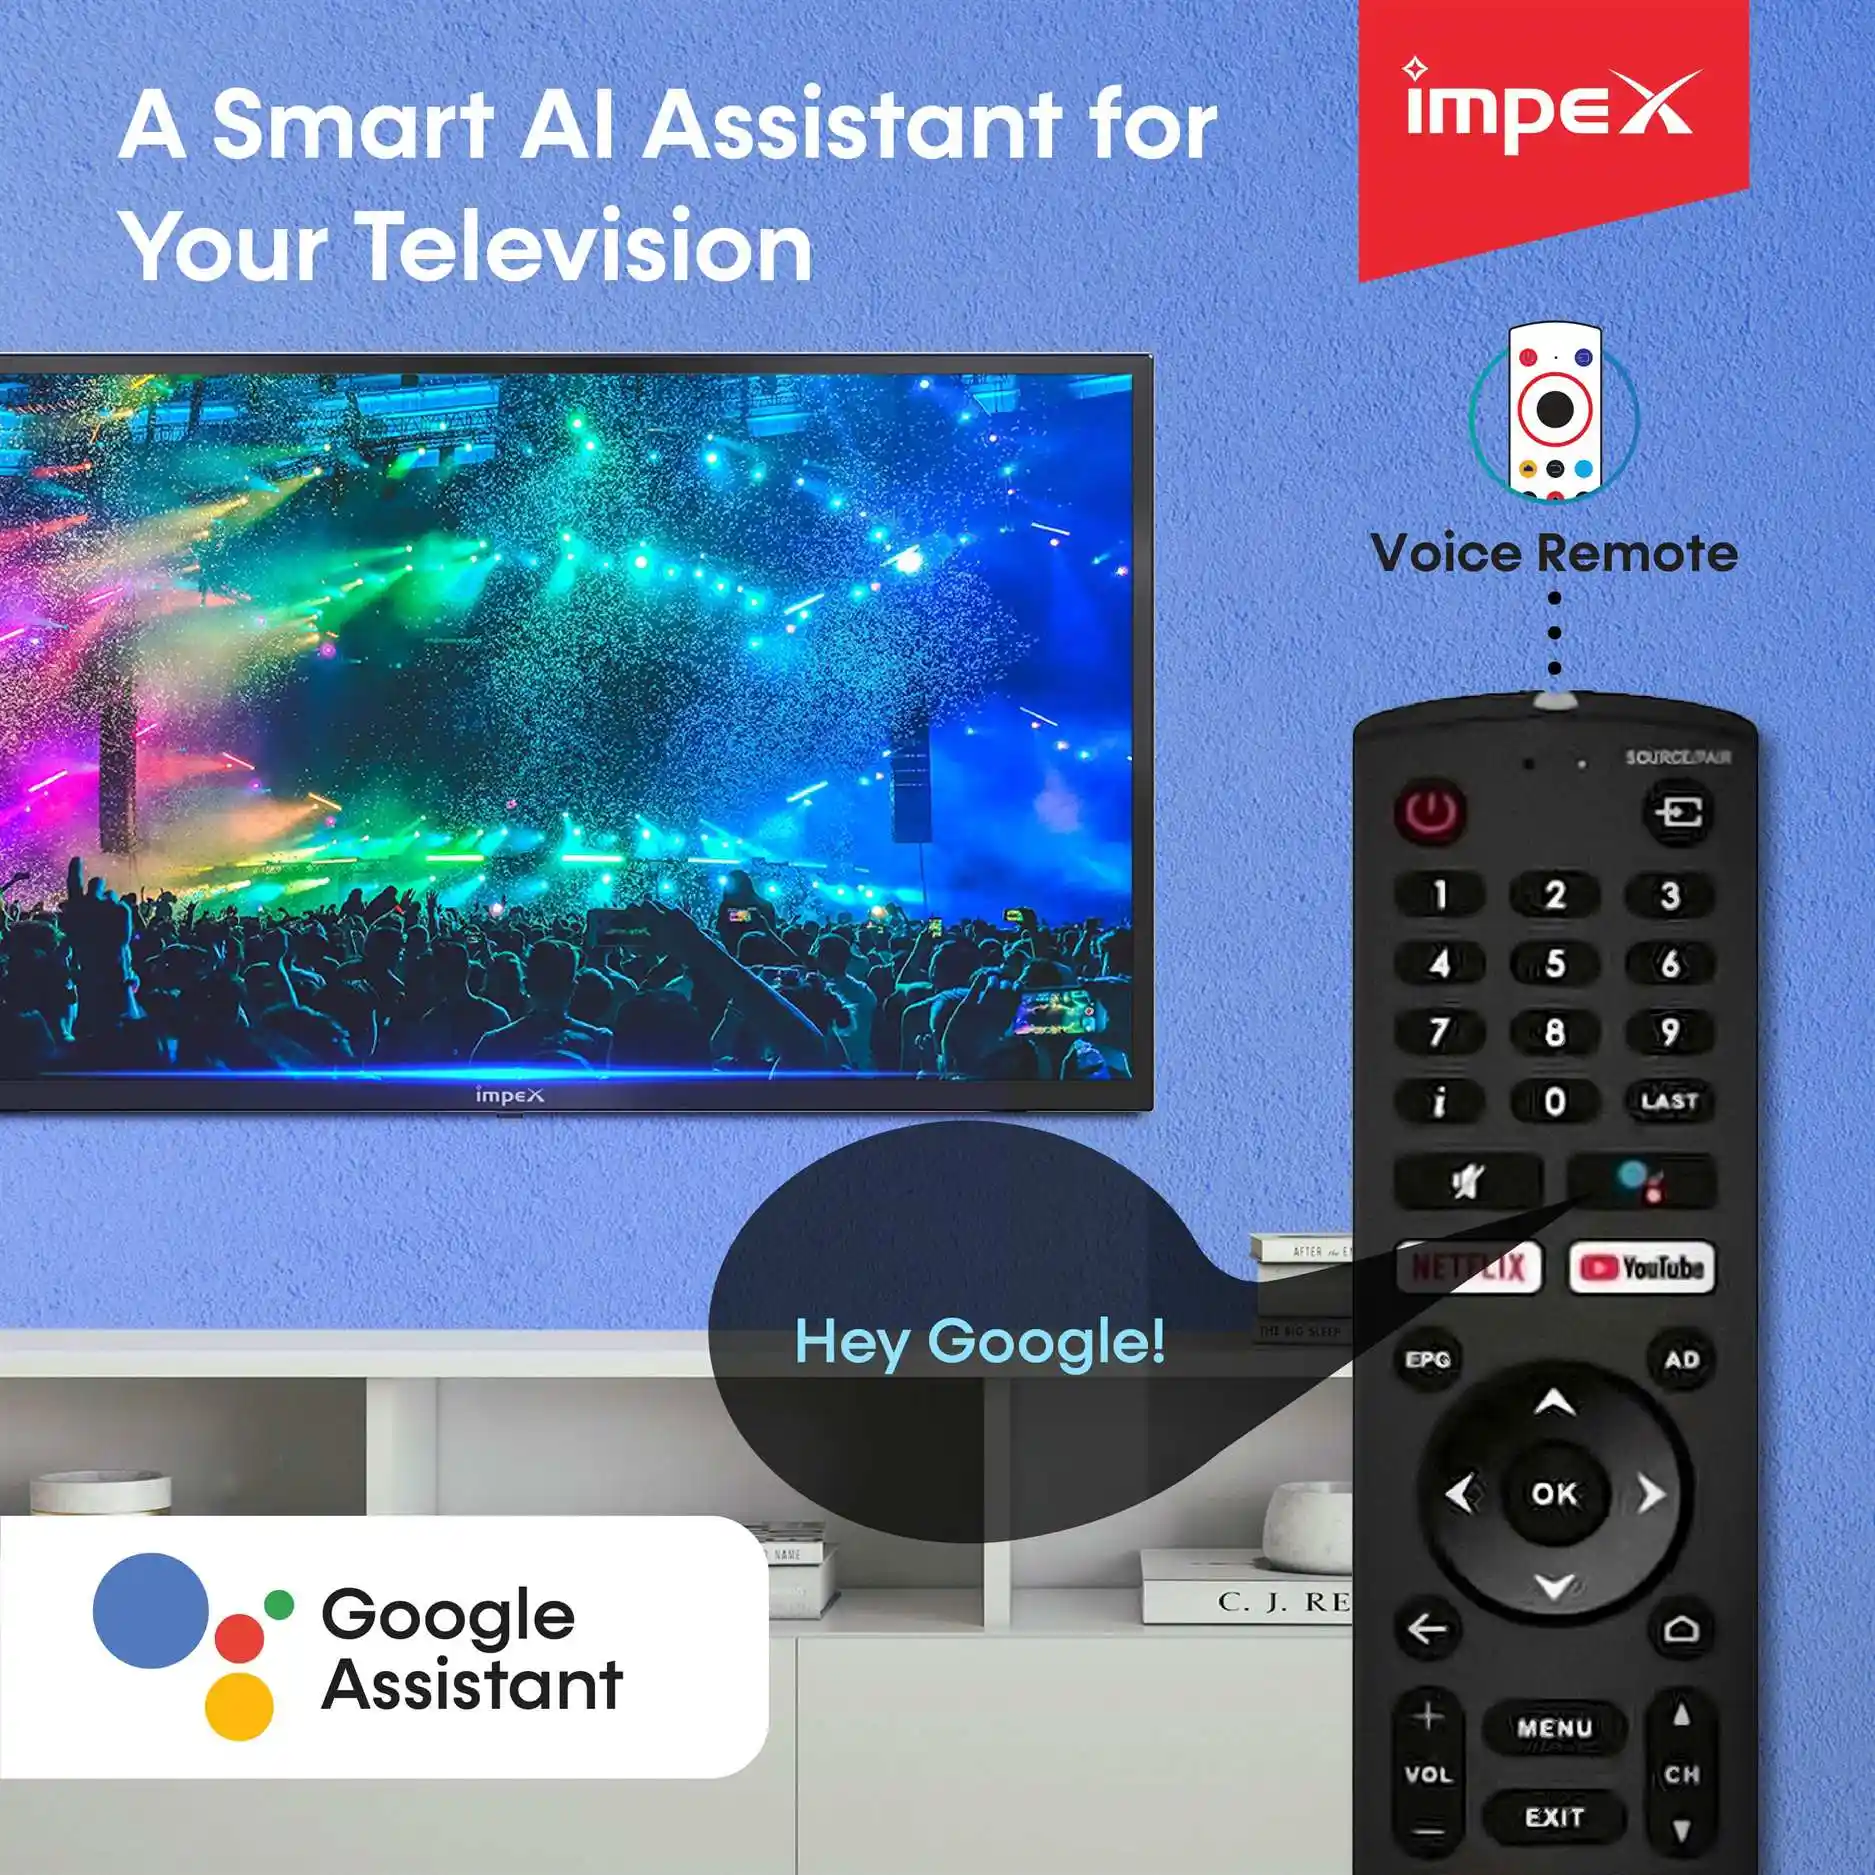 Grande 32 Smart AU20 | Google Certified Android Smart TV | HD TV